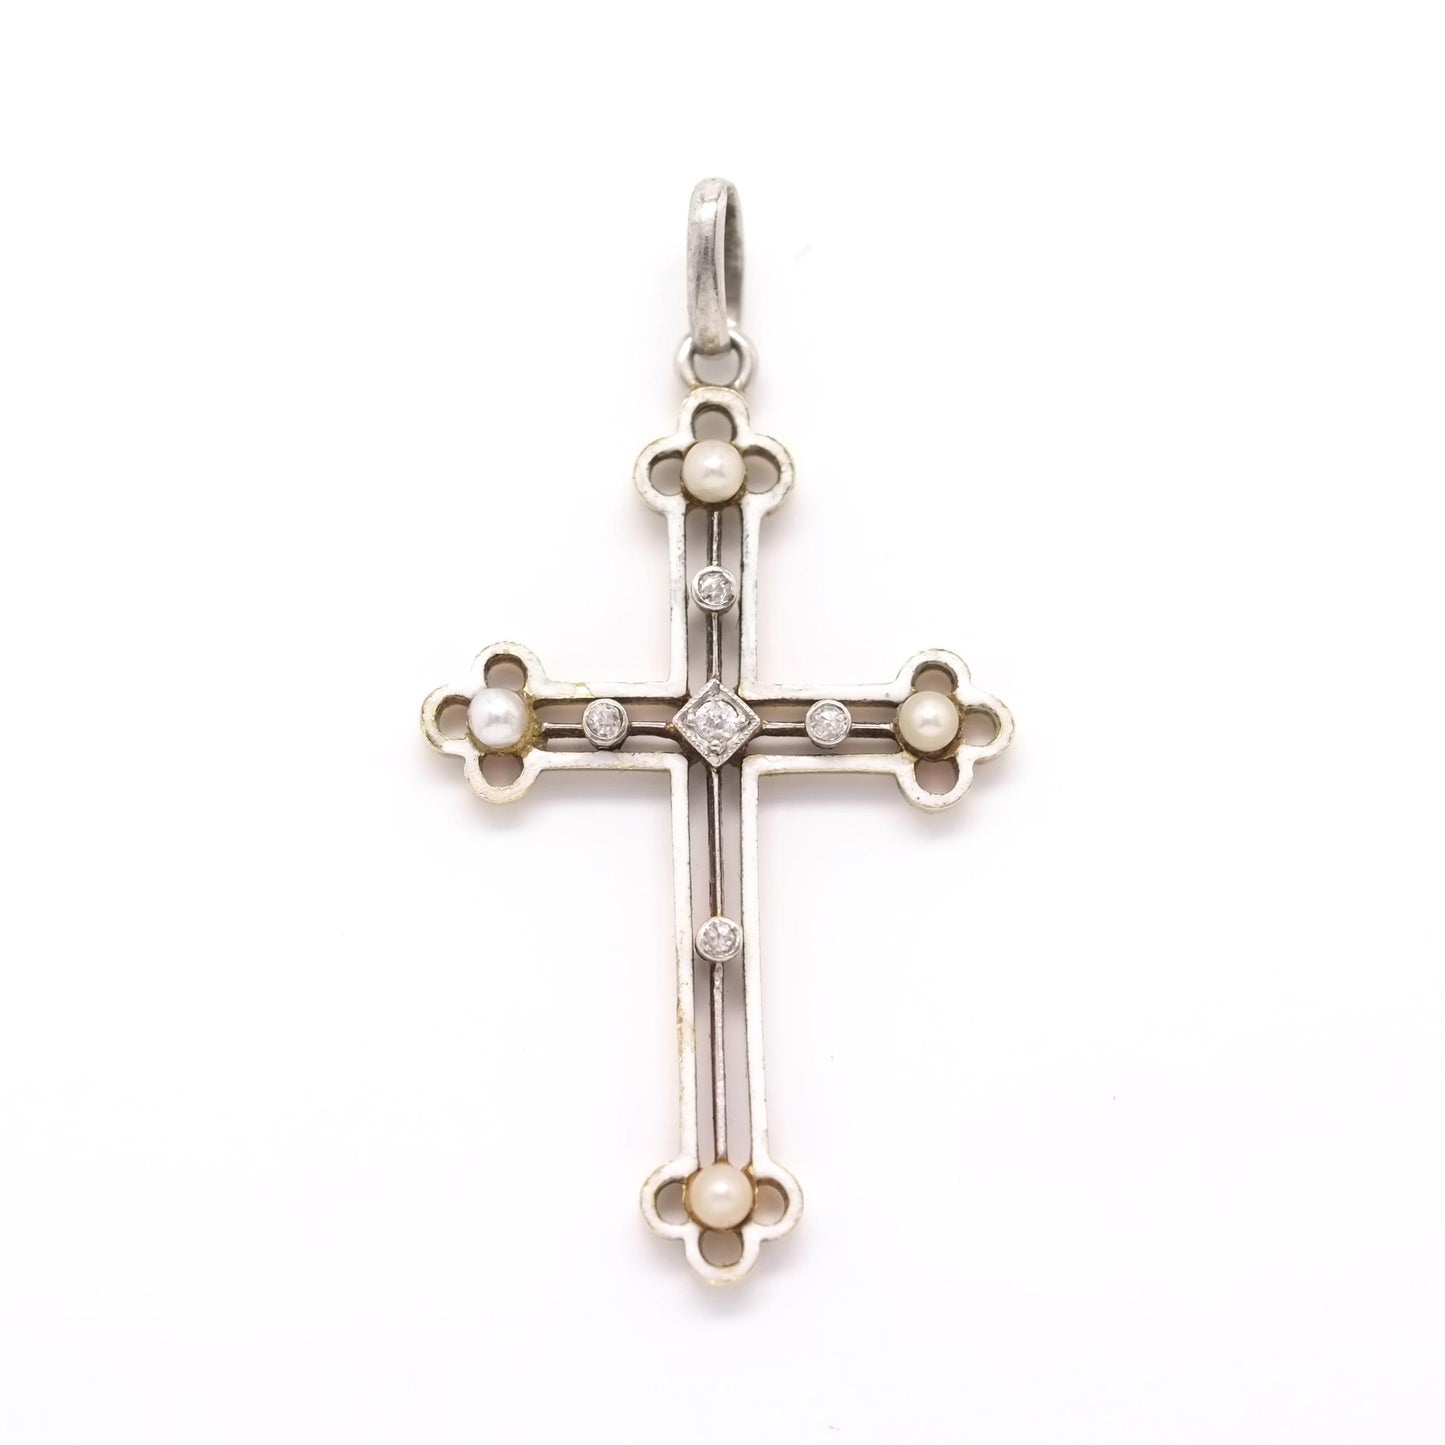 Antique Enamel Cross Pendant